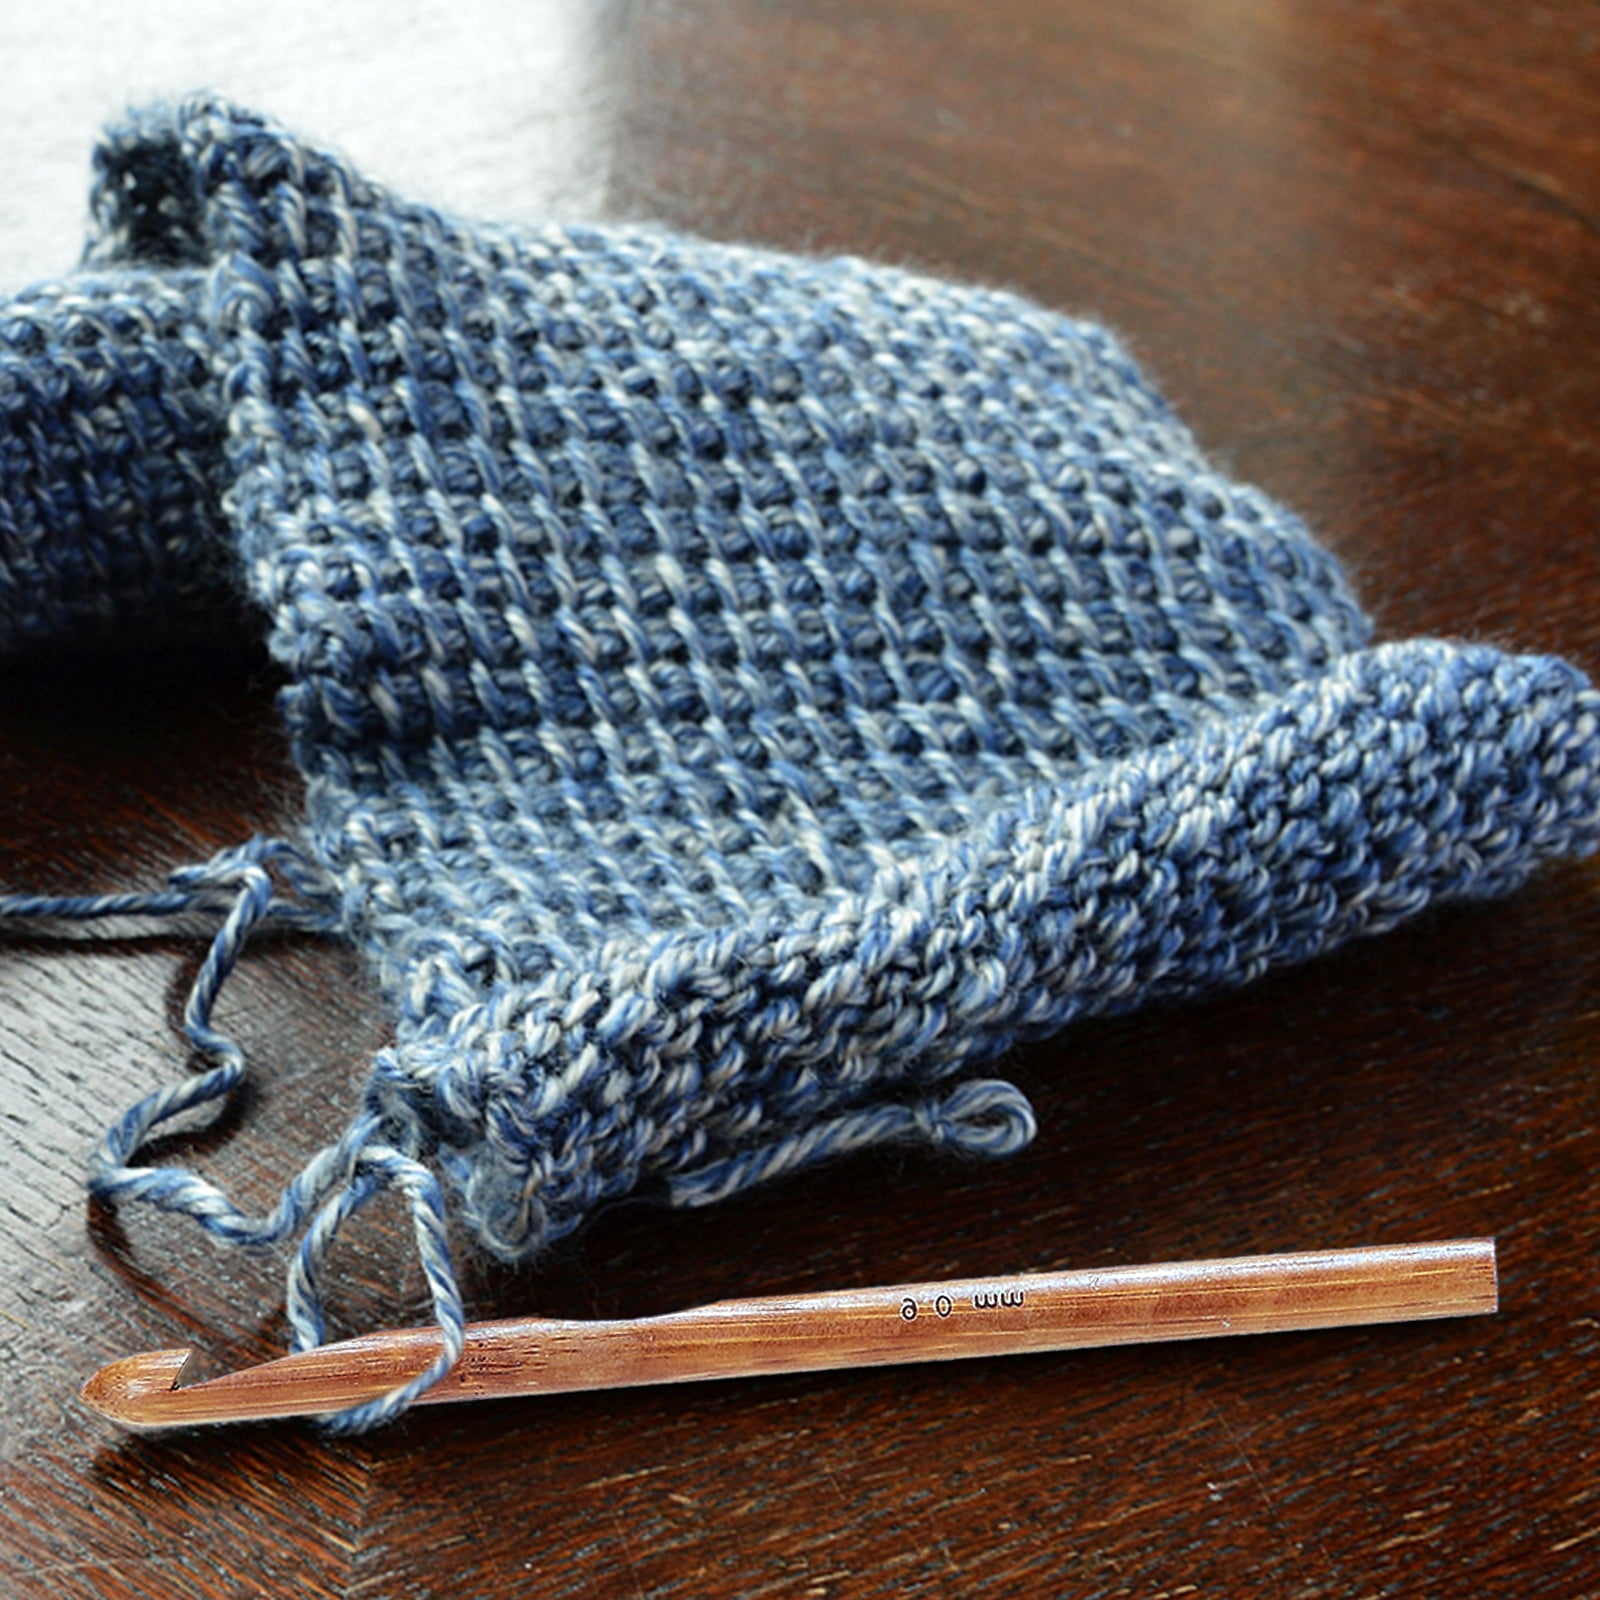 4pcs/set 4.5-6.0mm Bamboo Crochet Hook With White-golden Heads For Knitting